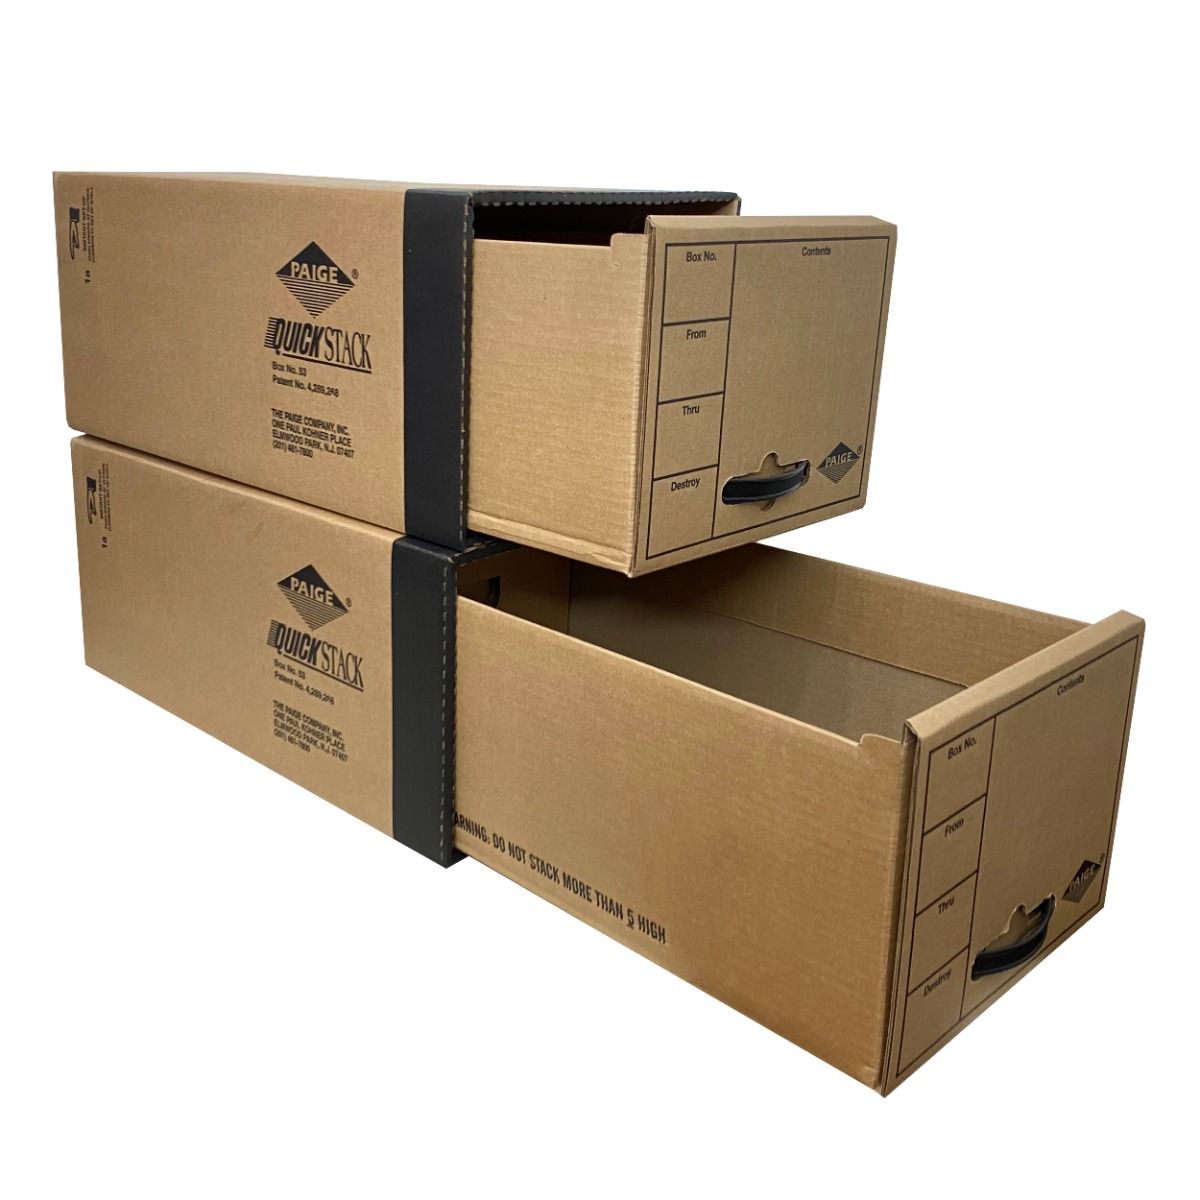 Cardboard File Box Corrugated Stationery Storage Box Office Desk Organizer  